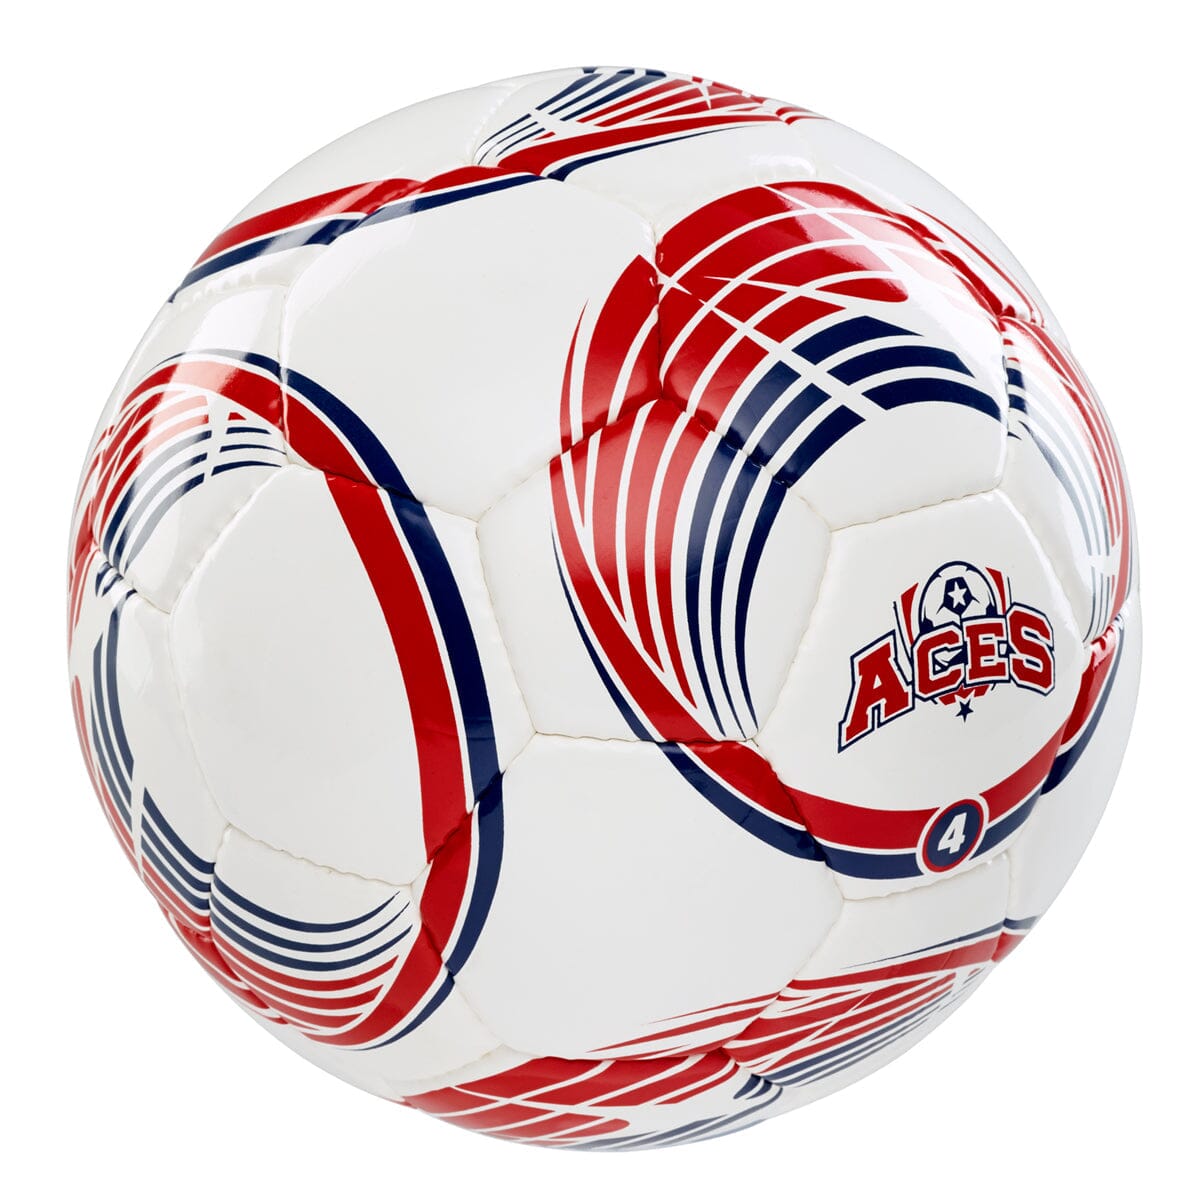 Aces Ball - Under 10 Program Balls Xara Soccer White/Red/Navy Size 4 